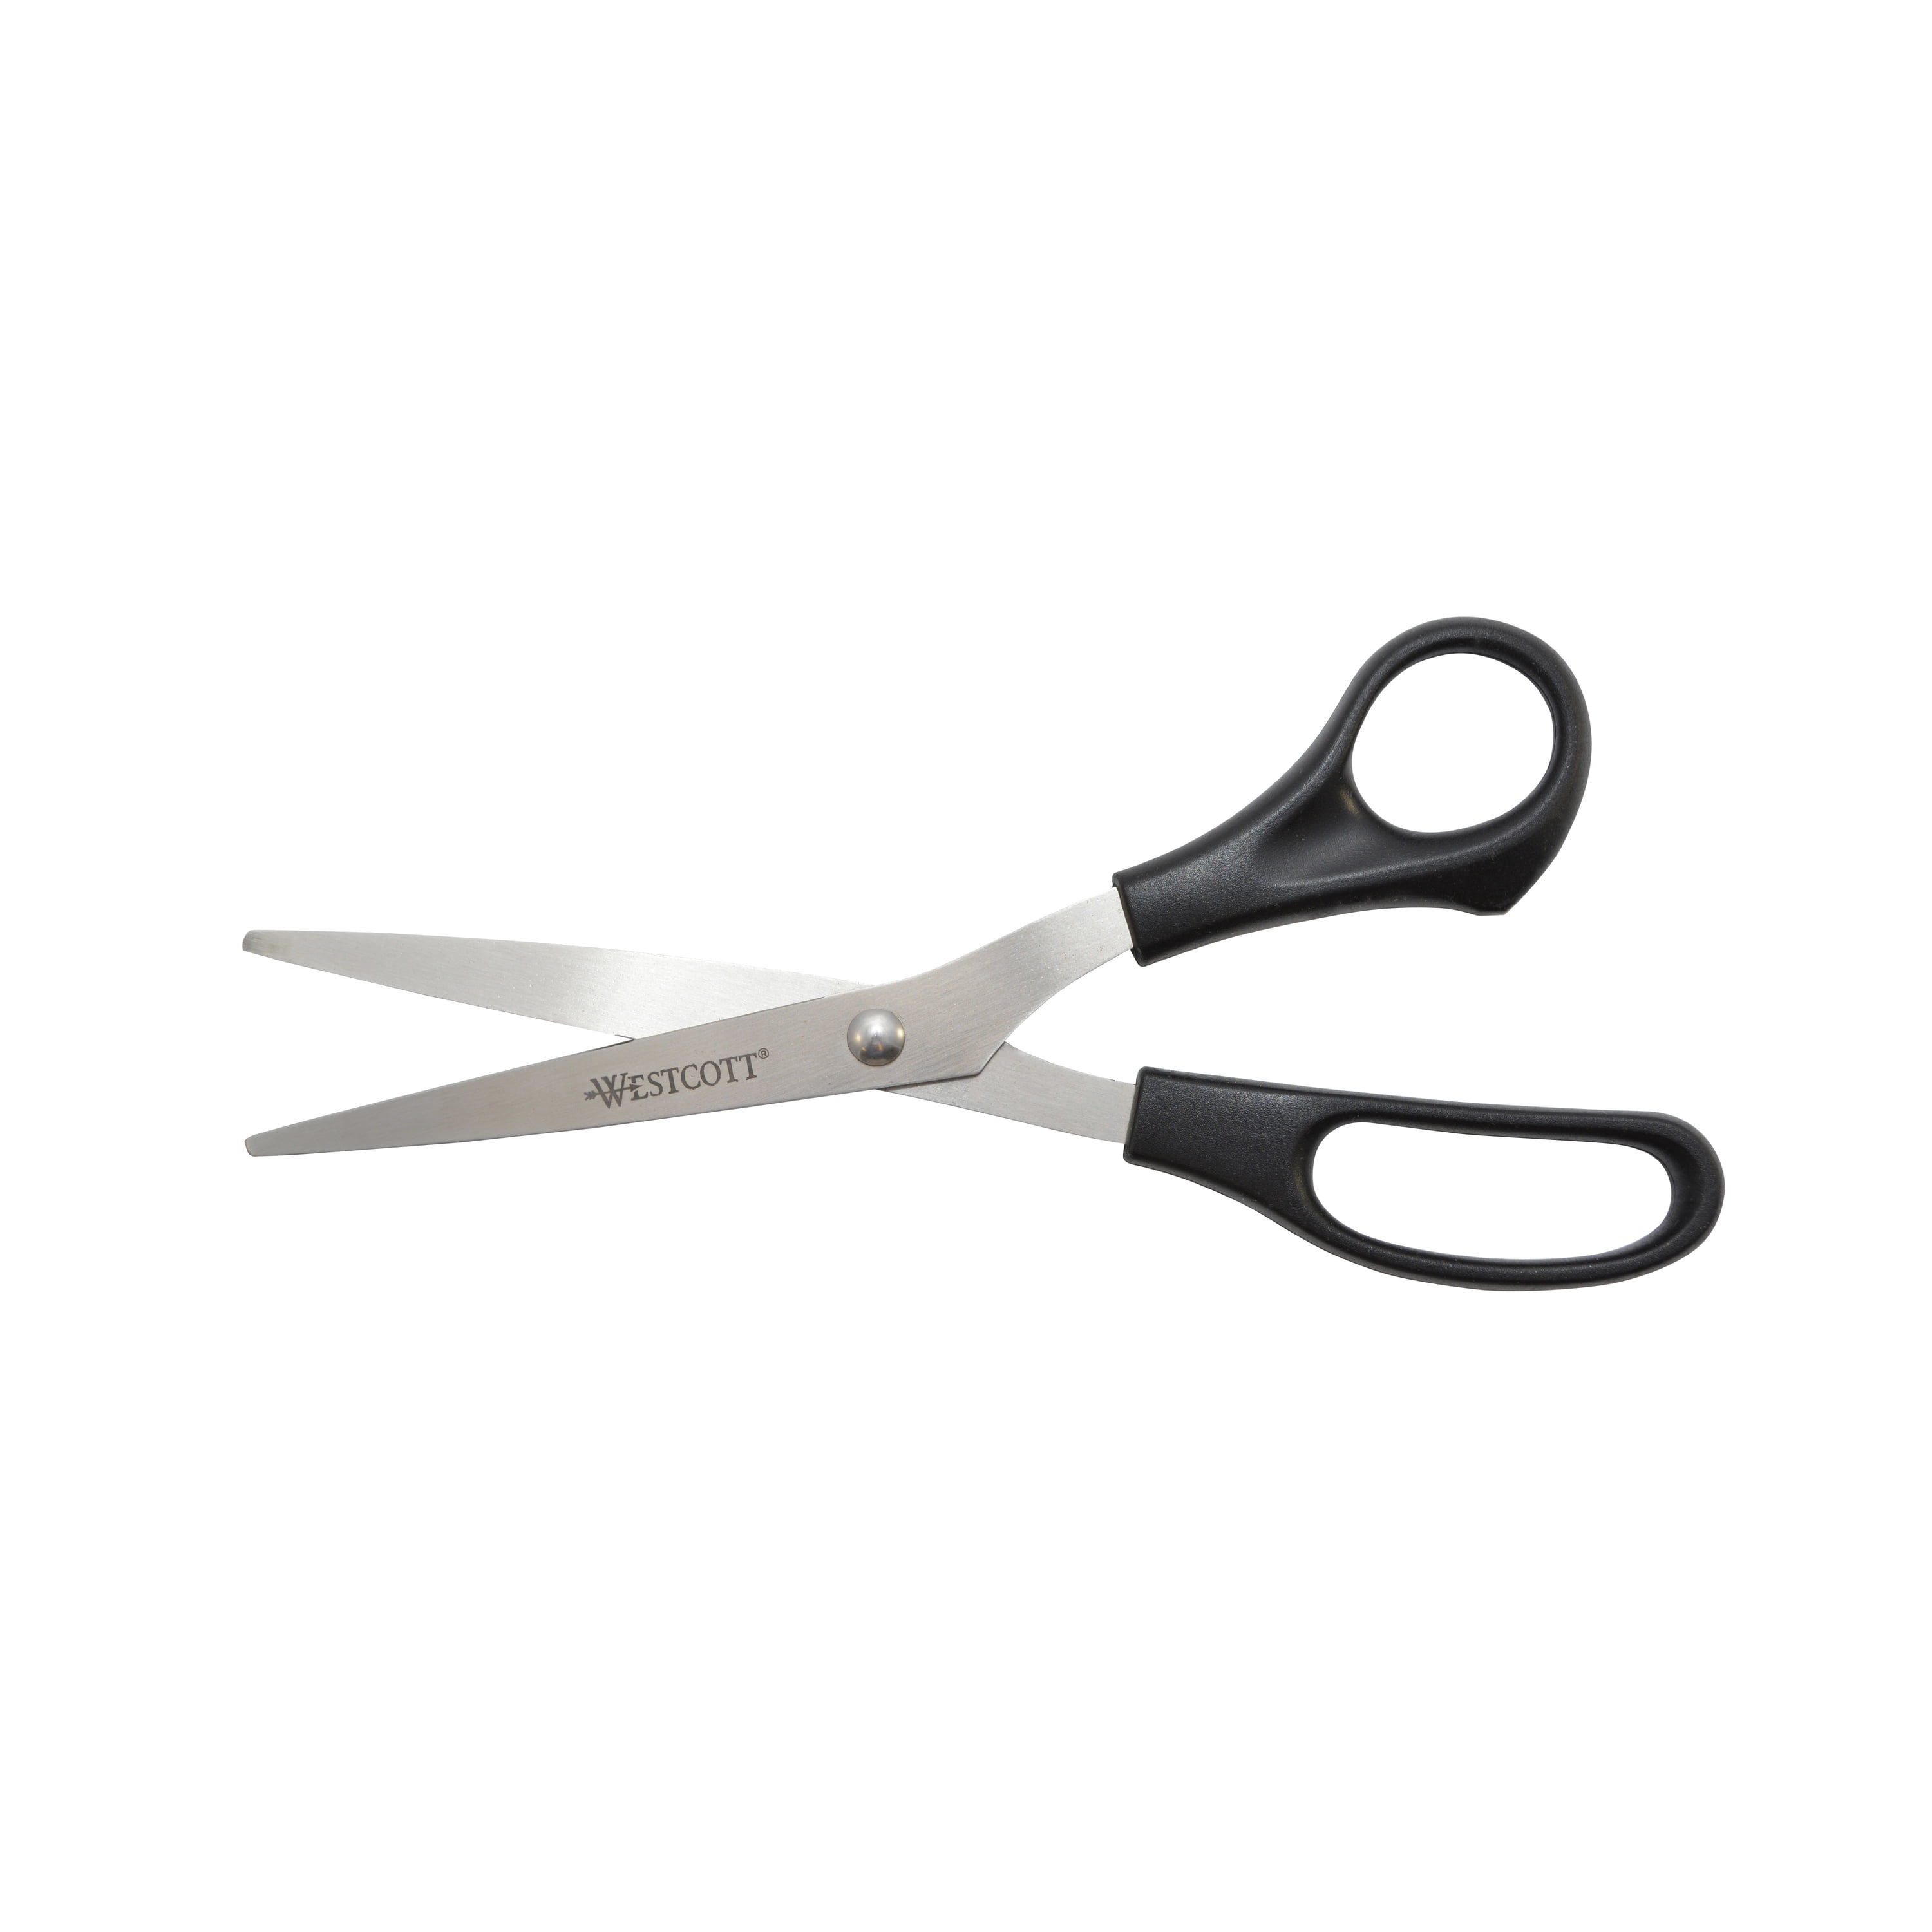 Deli Black Blade Scissors All Purpose Non Stick Stainless Steel Craft –  AOOKMIYA